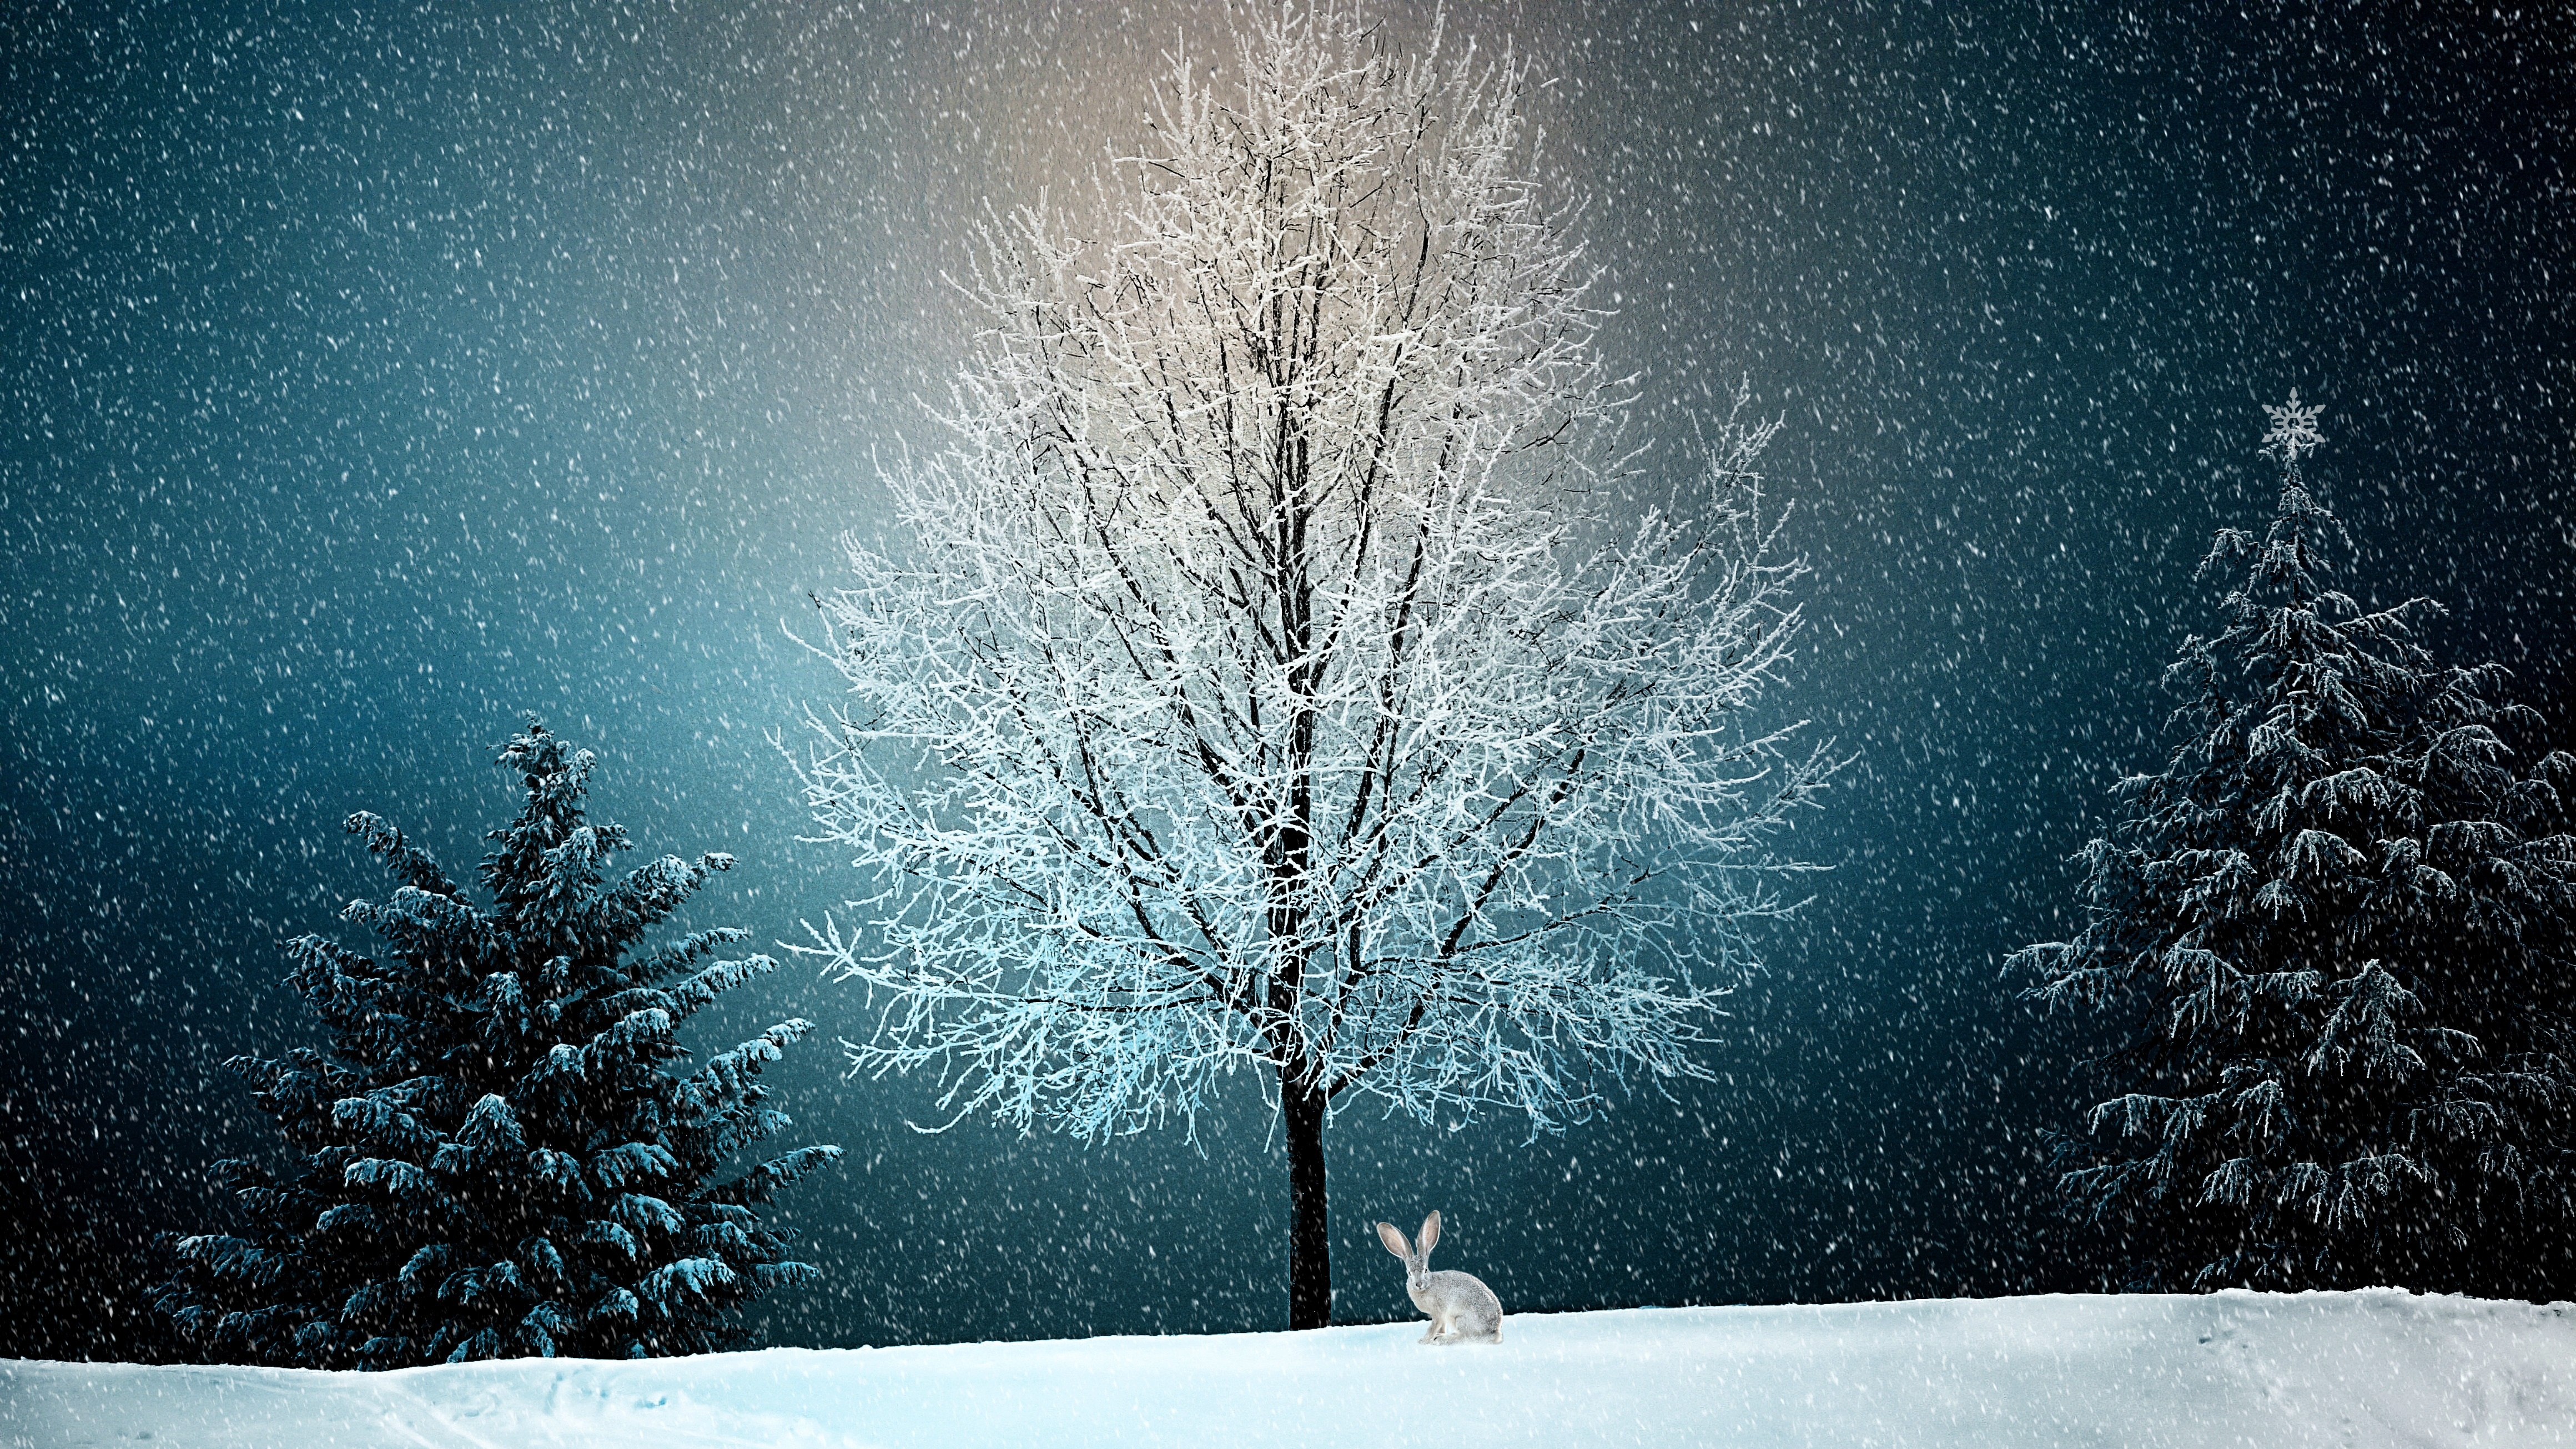 Artistic Bunny Snow Winter 4640x2610